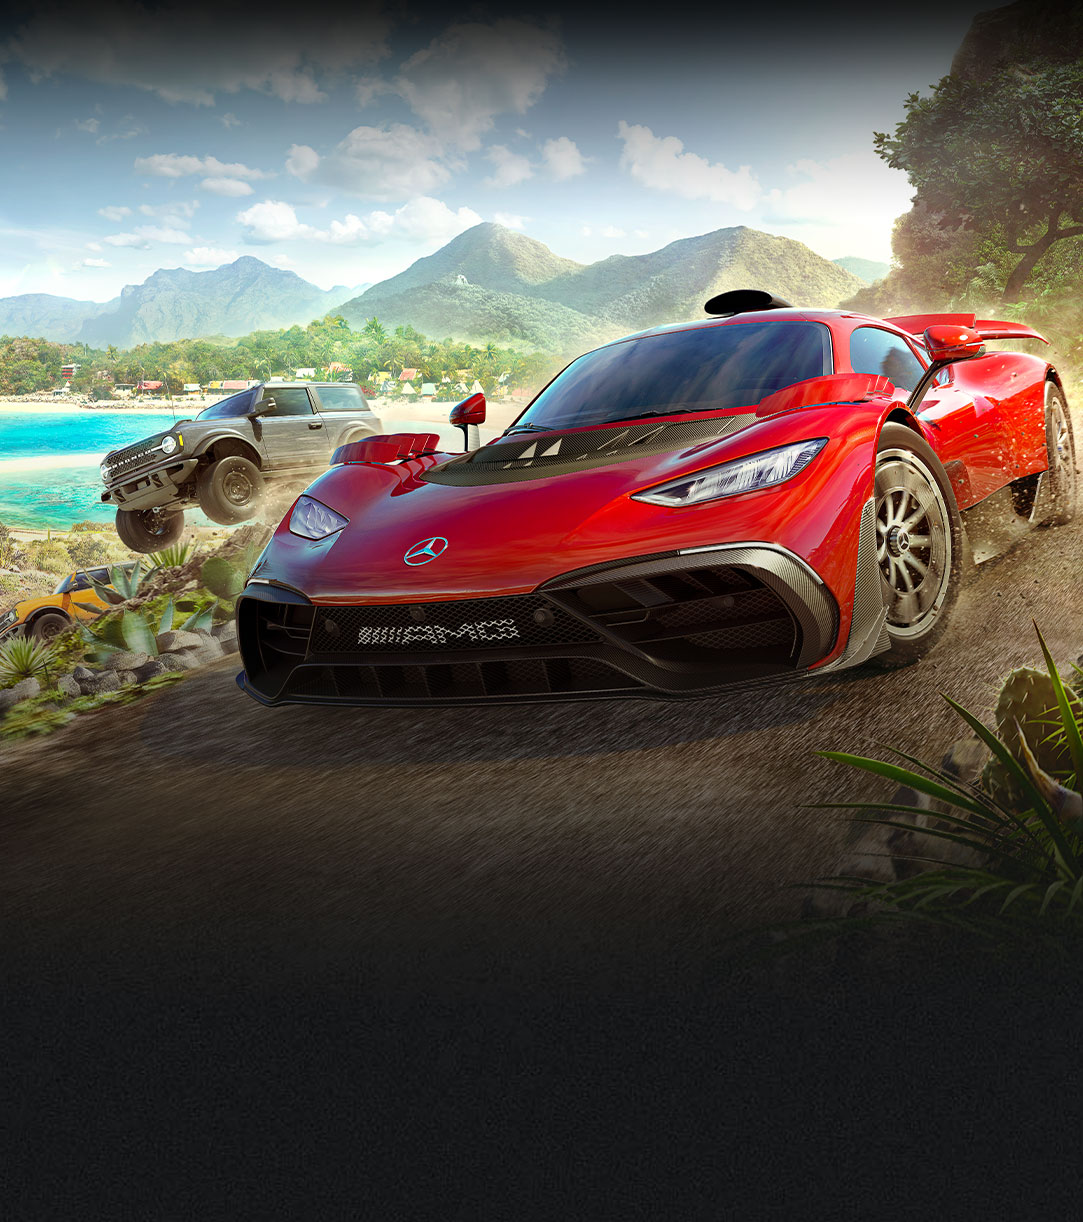 Forza Horizon 5 中的車輛飛快地駛過靠海又有許多植物的泥路。